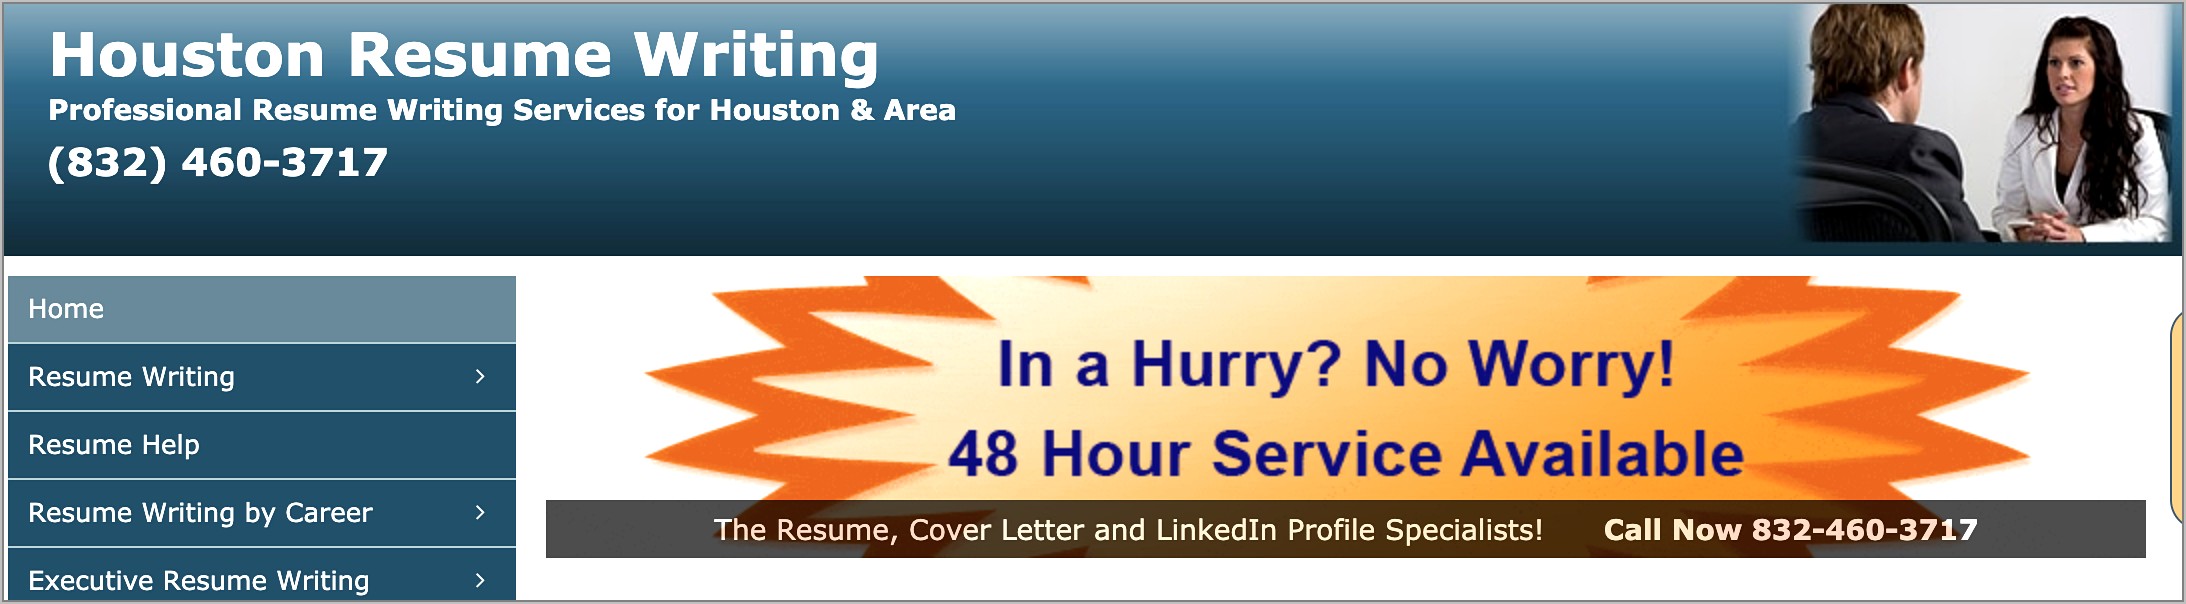 Resume Writing Services Houston